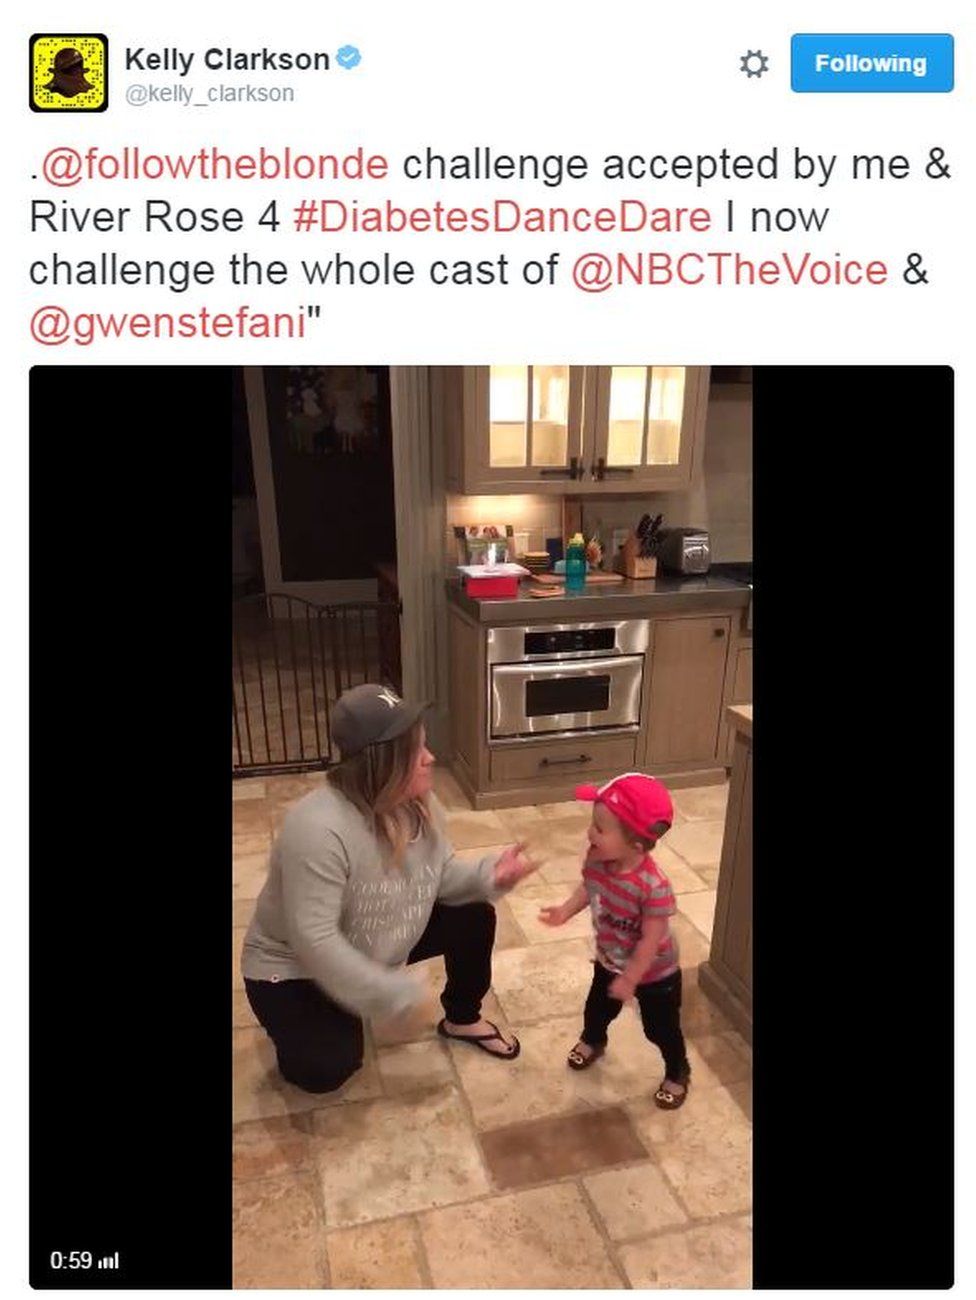 Kelly Clarkson and her daughter doing the #DiabetesDanceDare challenge